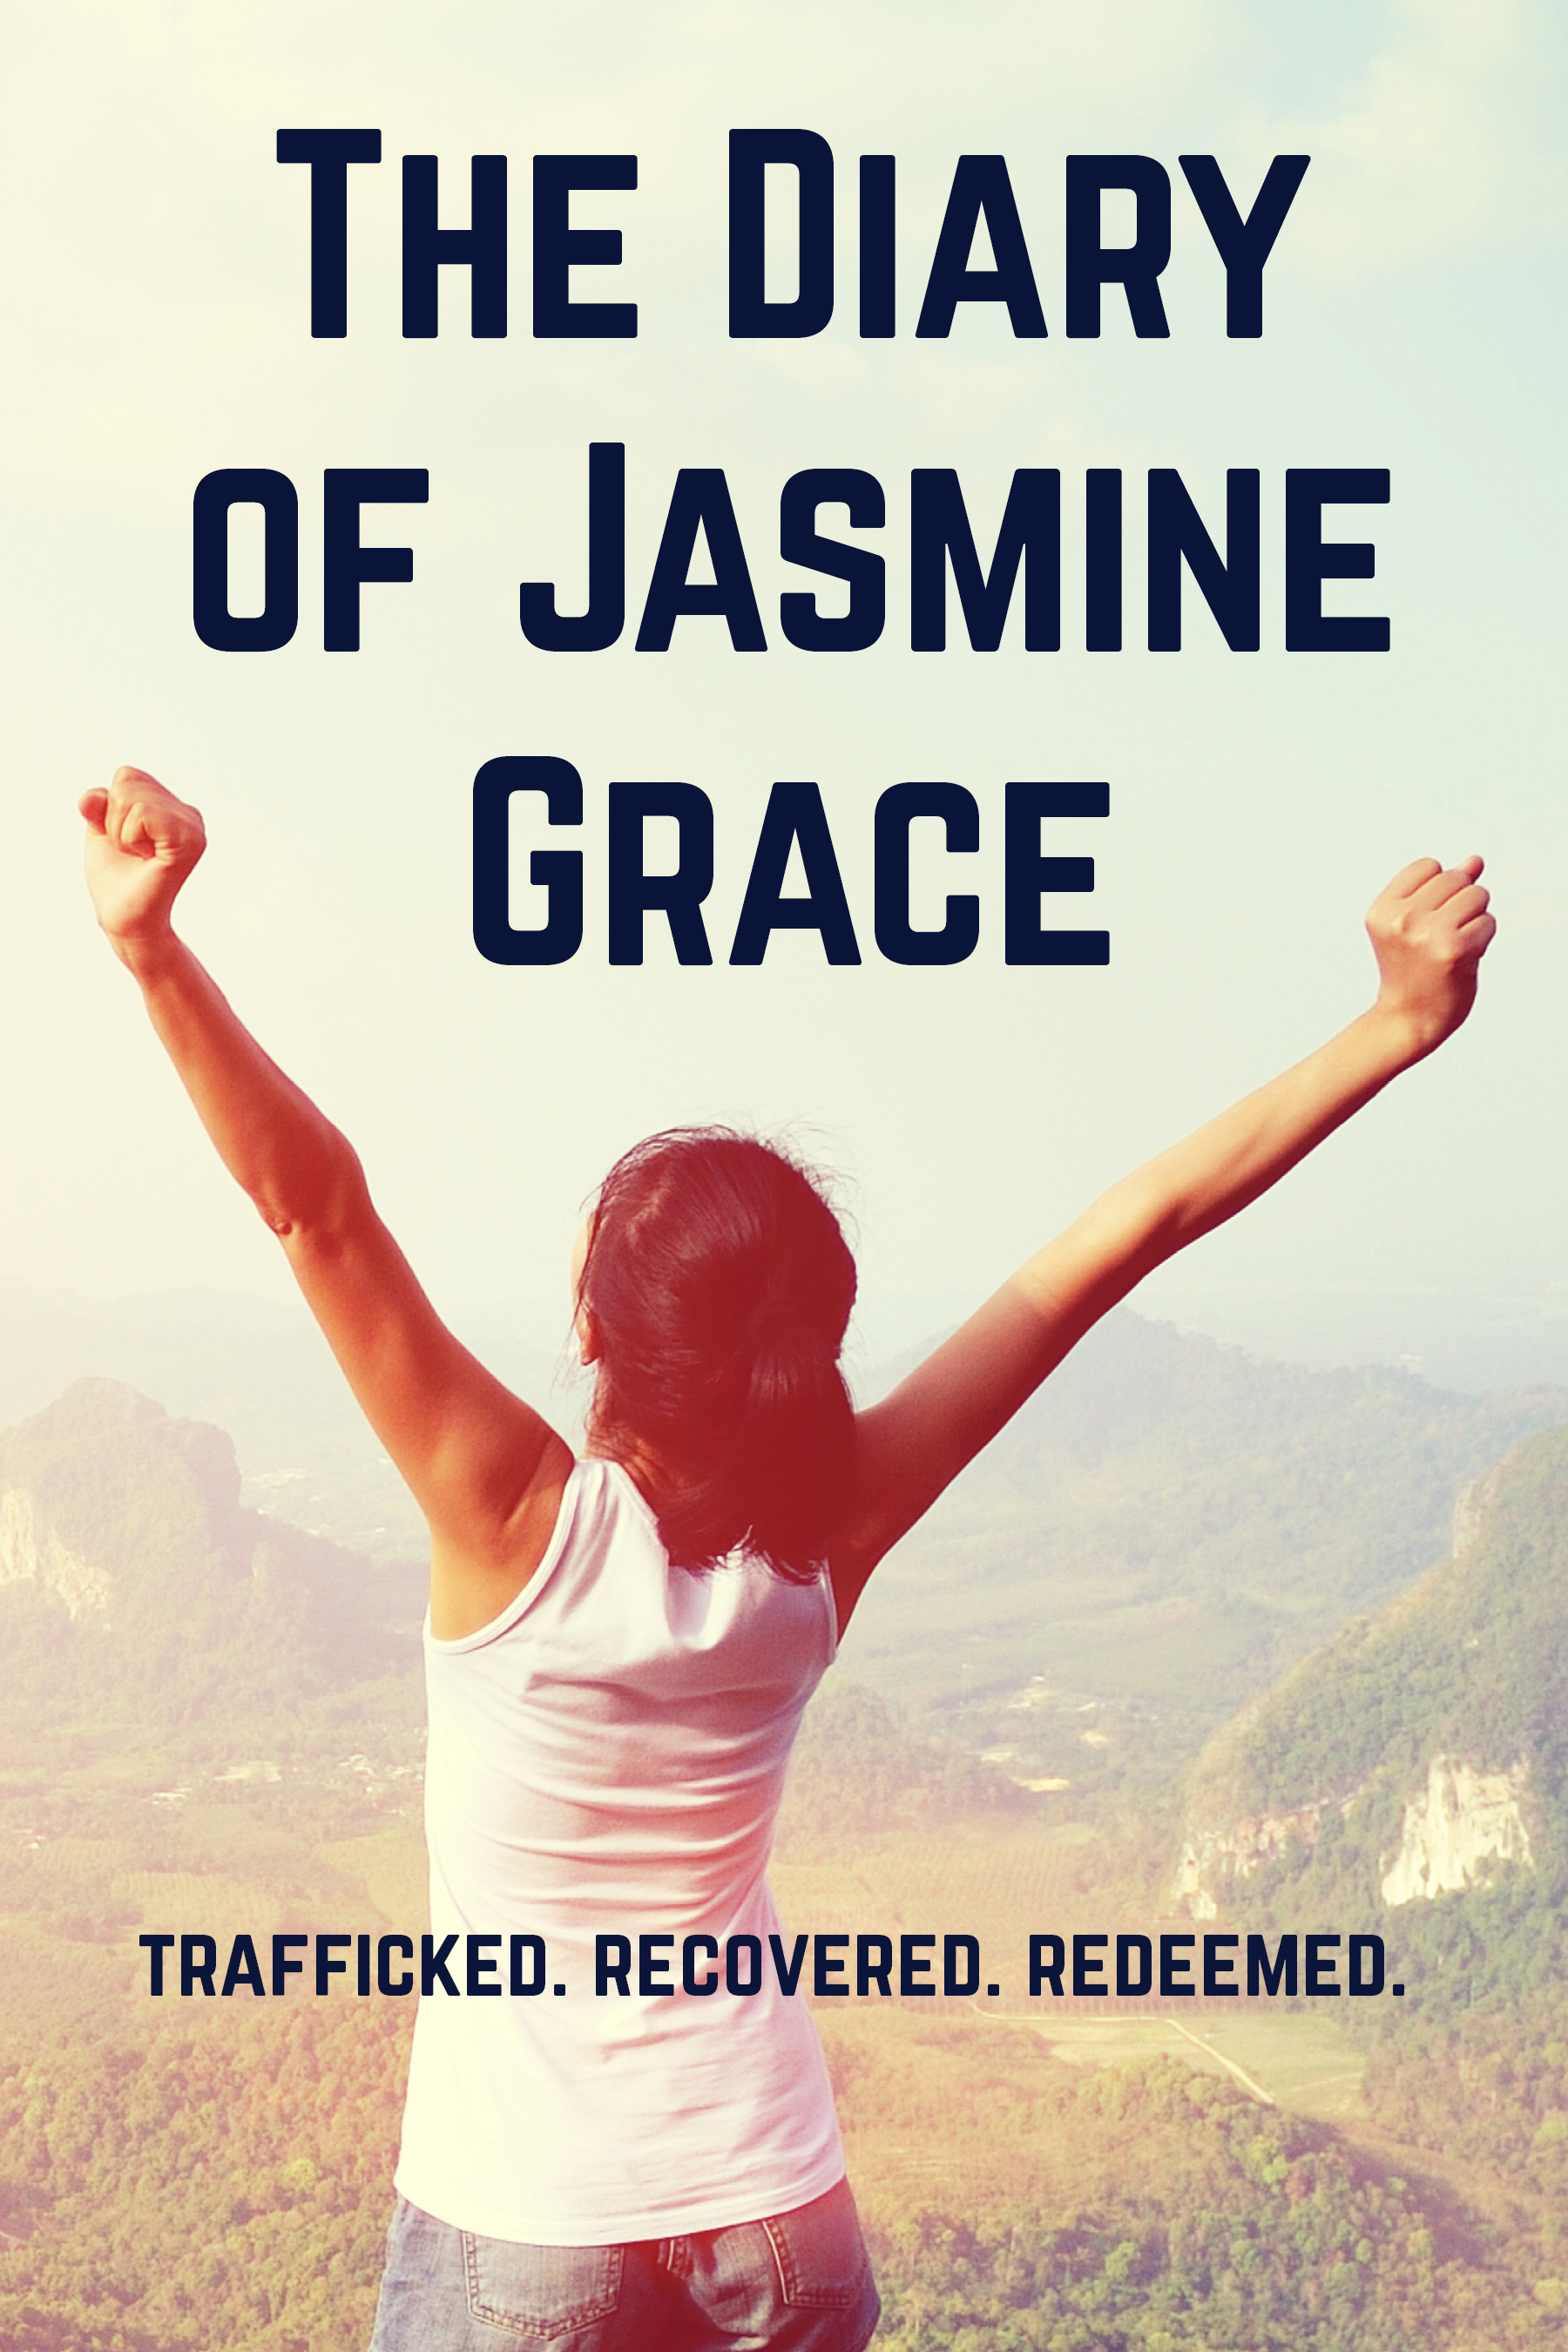 The Diary of Jasmine Grace